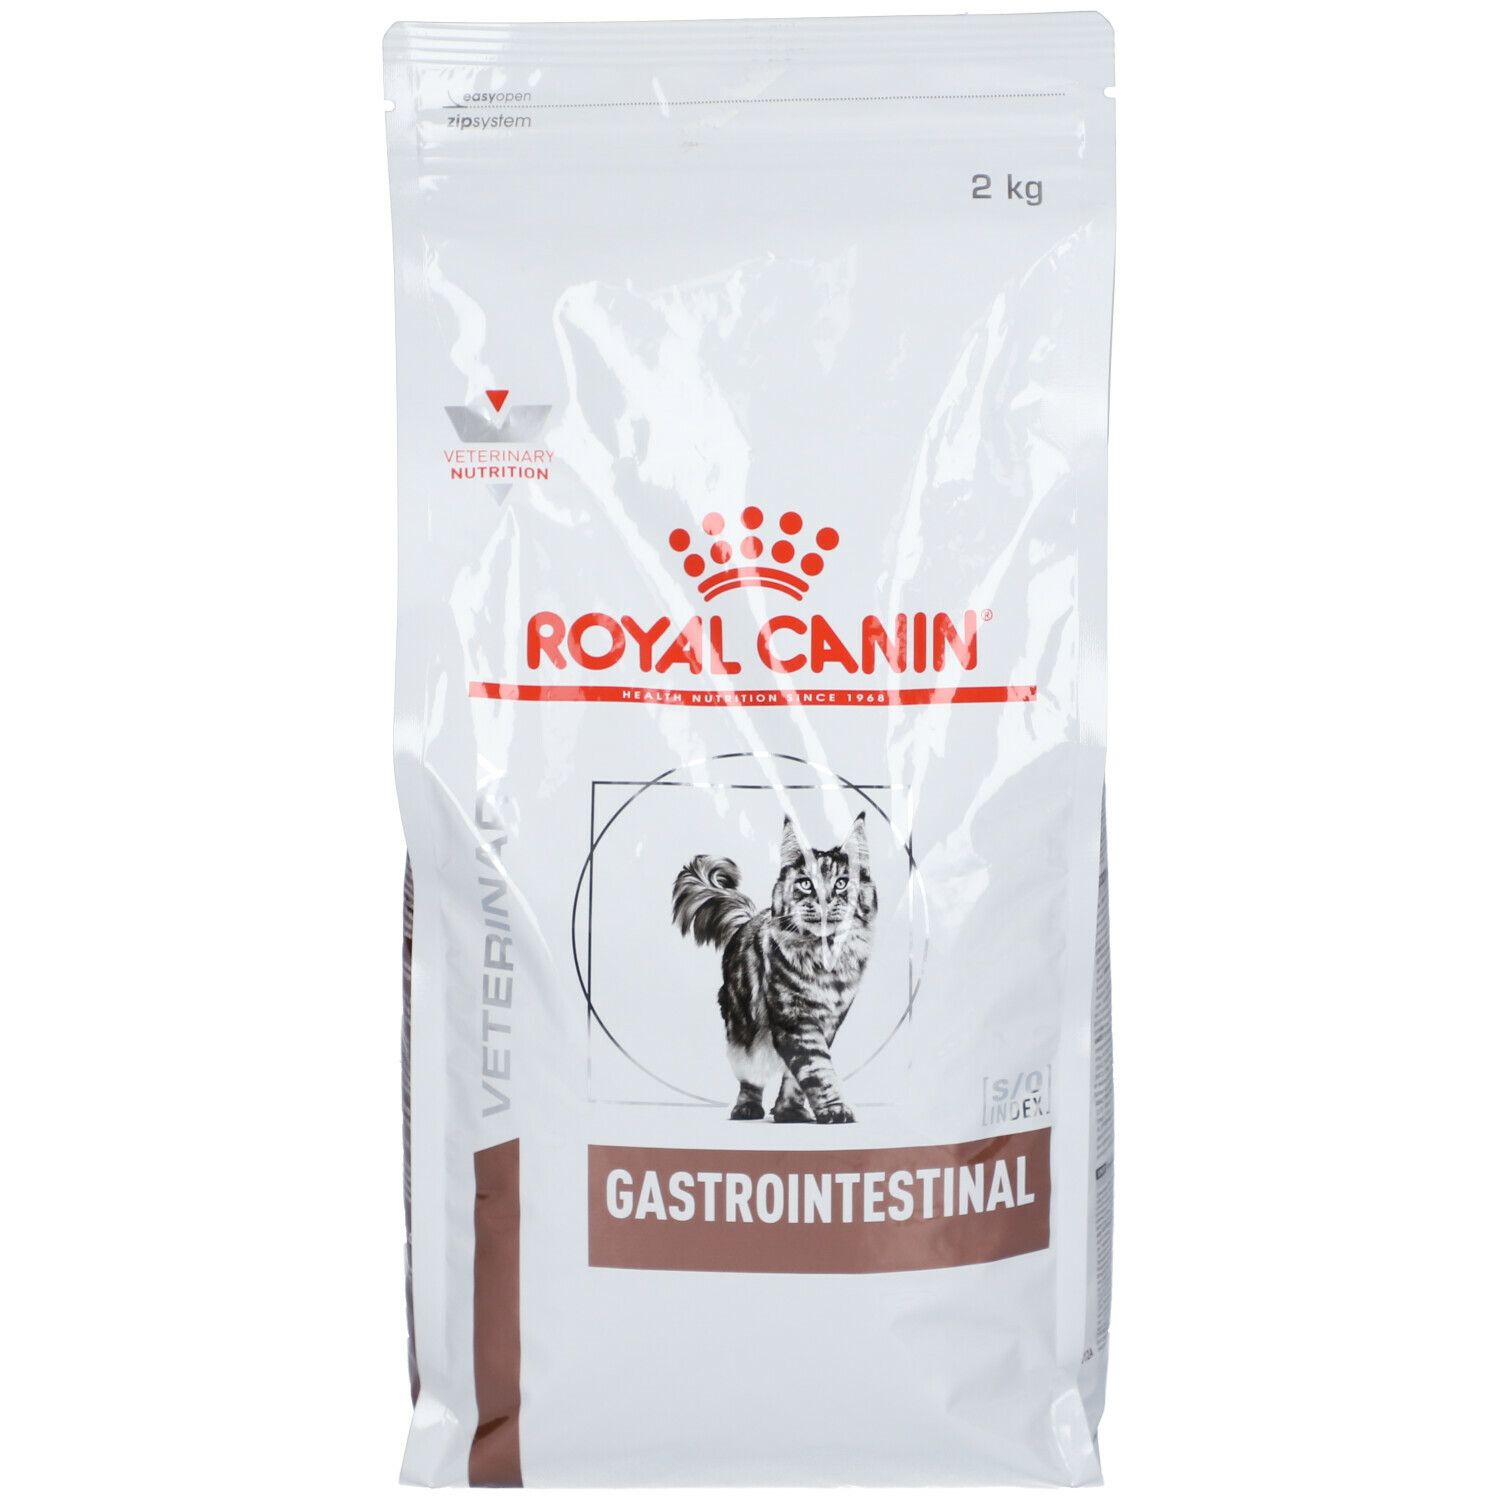 ROYAL CANIN® s/o Gastrointestinal Katze